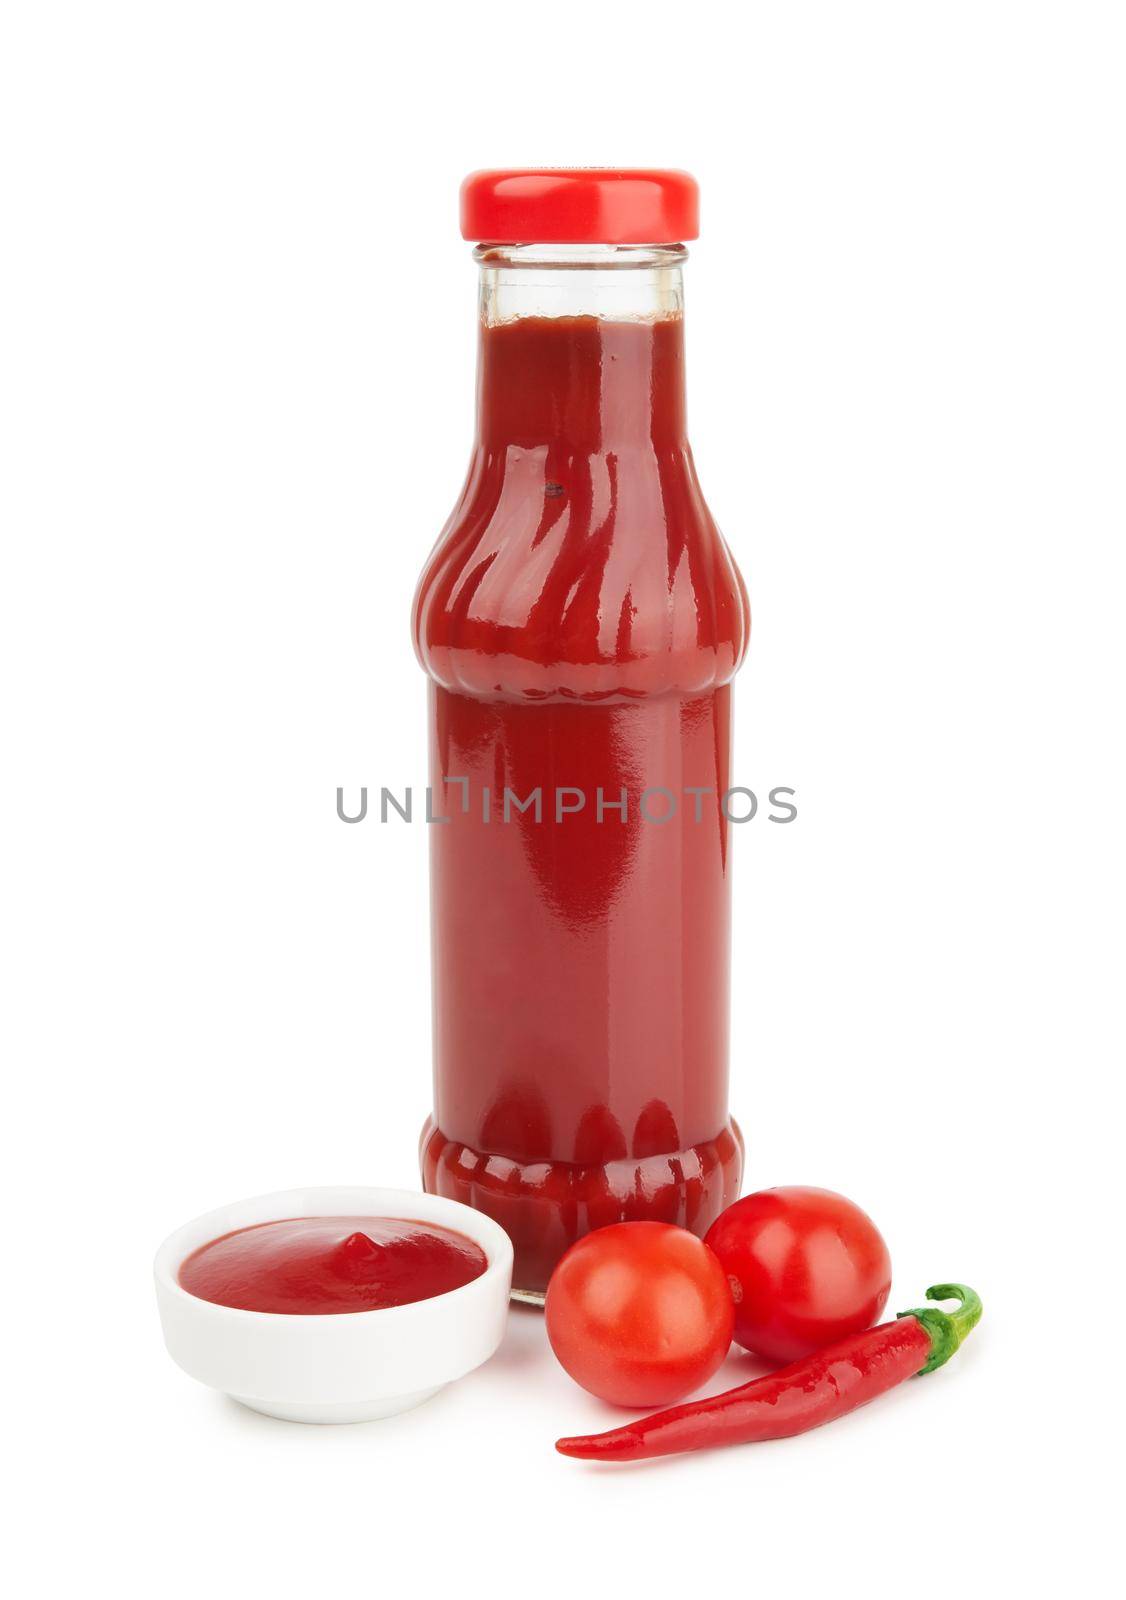 Bottle of ketchup by pioneer111